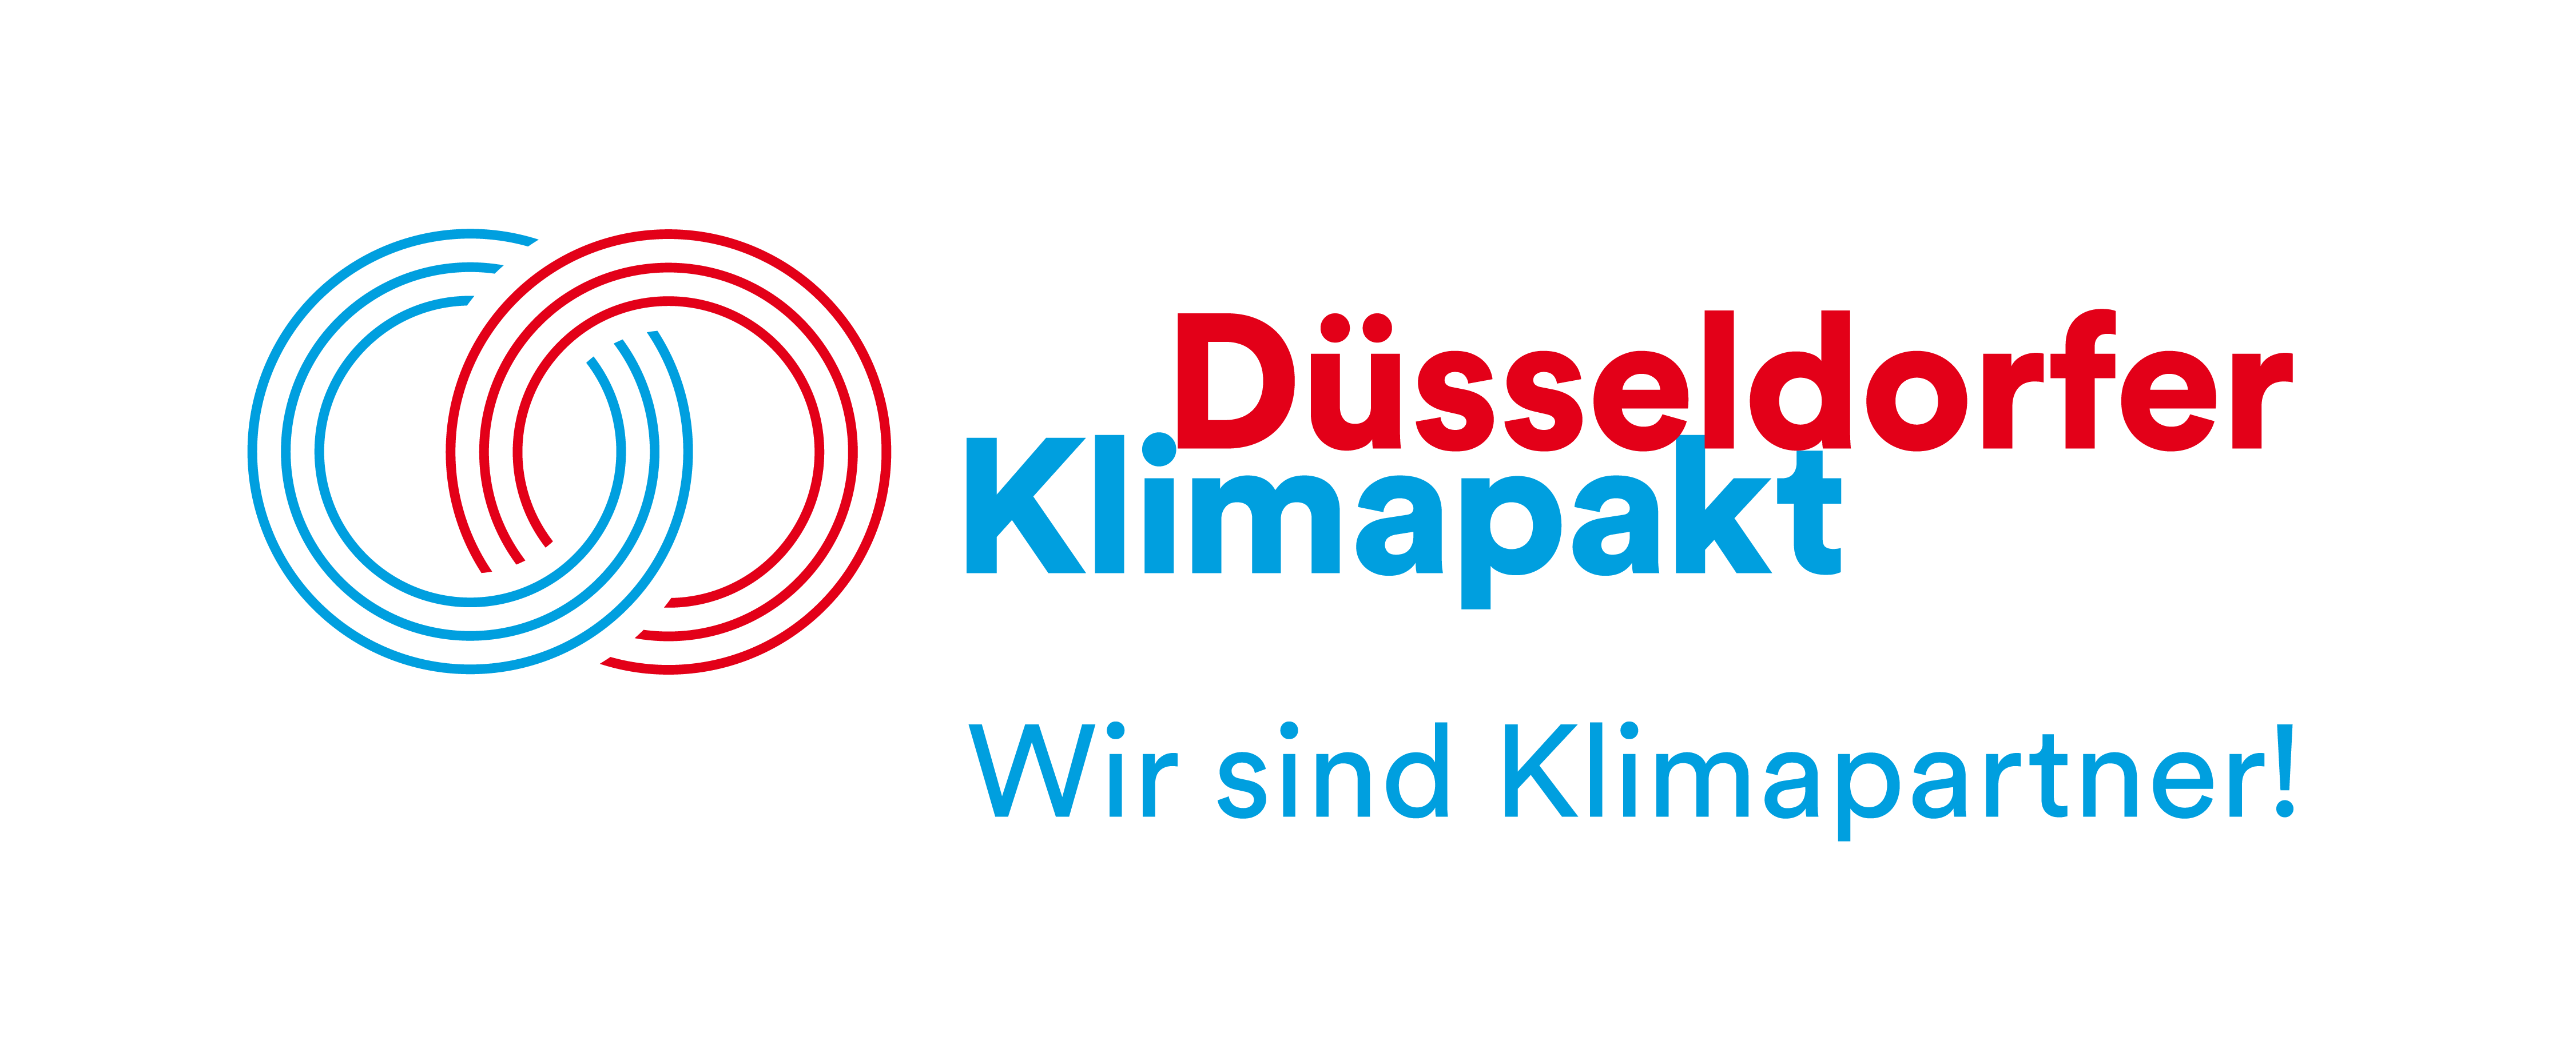 Klimapakt Düsseldorf: Wir sind Klimapartner